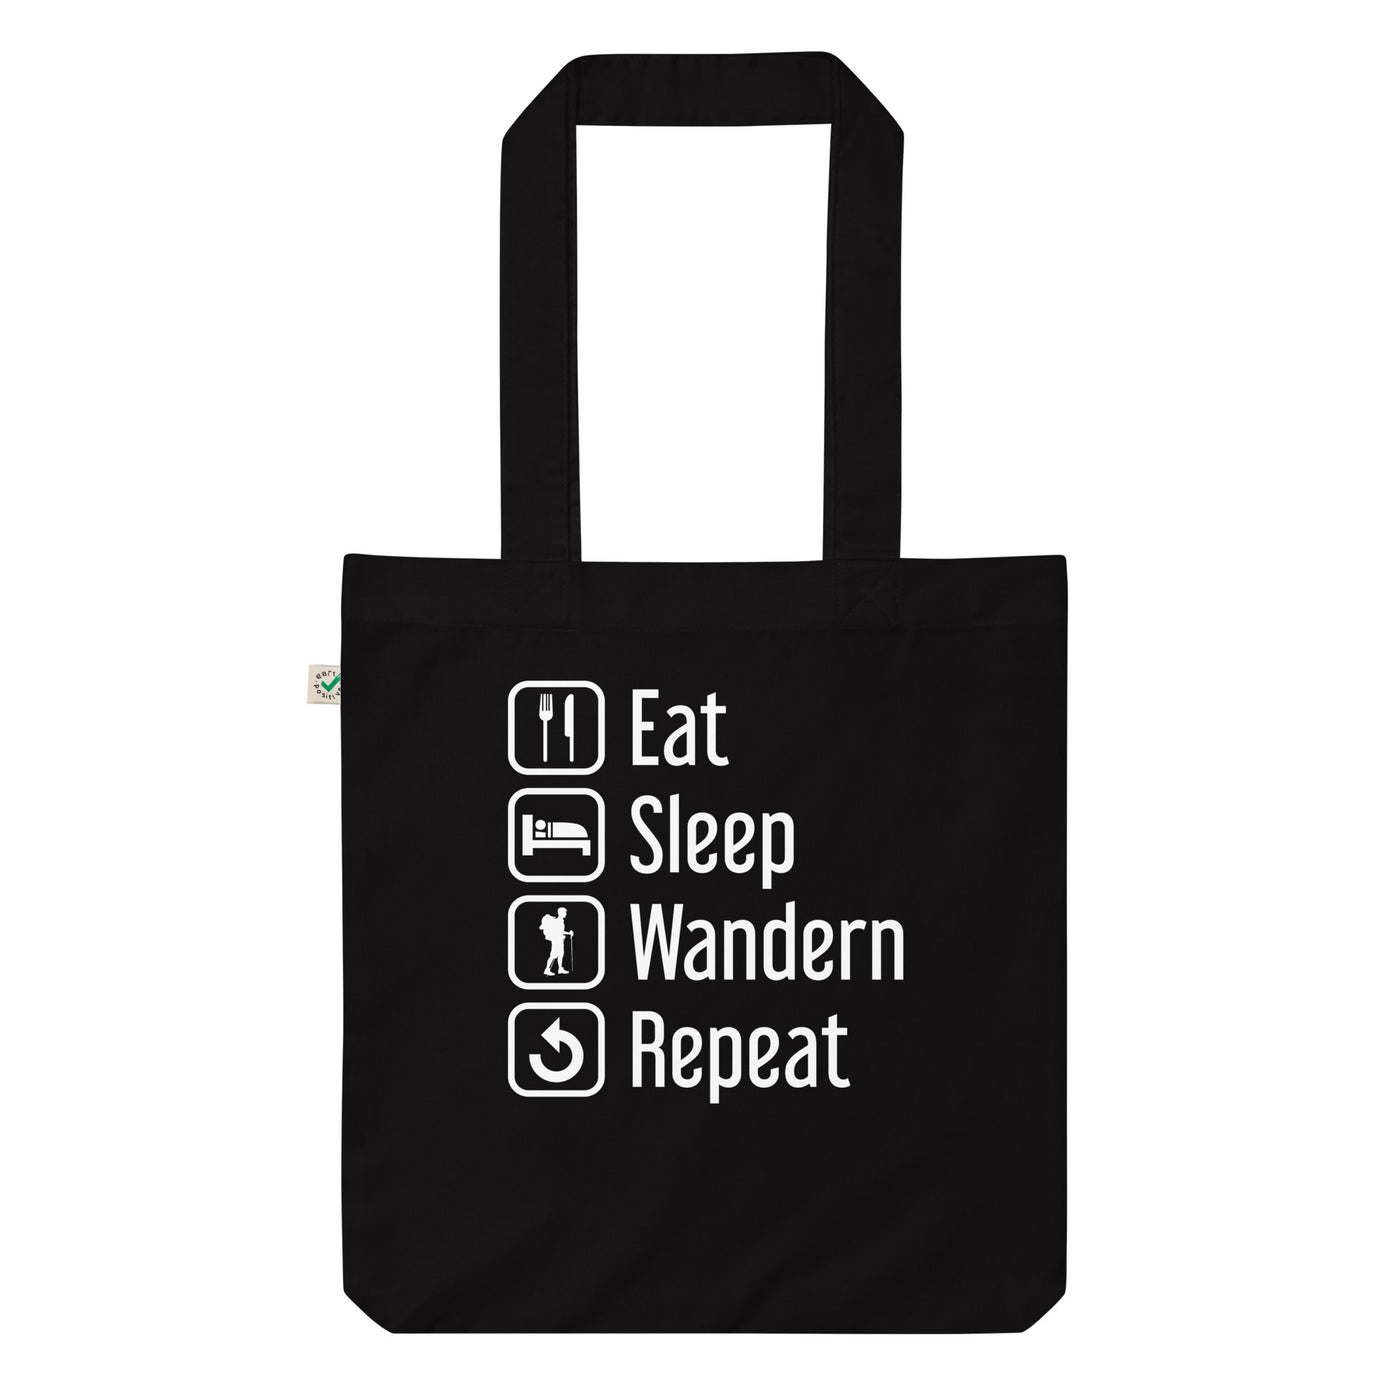 Eat Sleep Wandern Repeat - Organic Einkaufstasche wandern Black